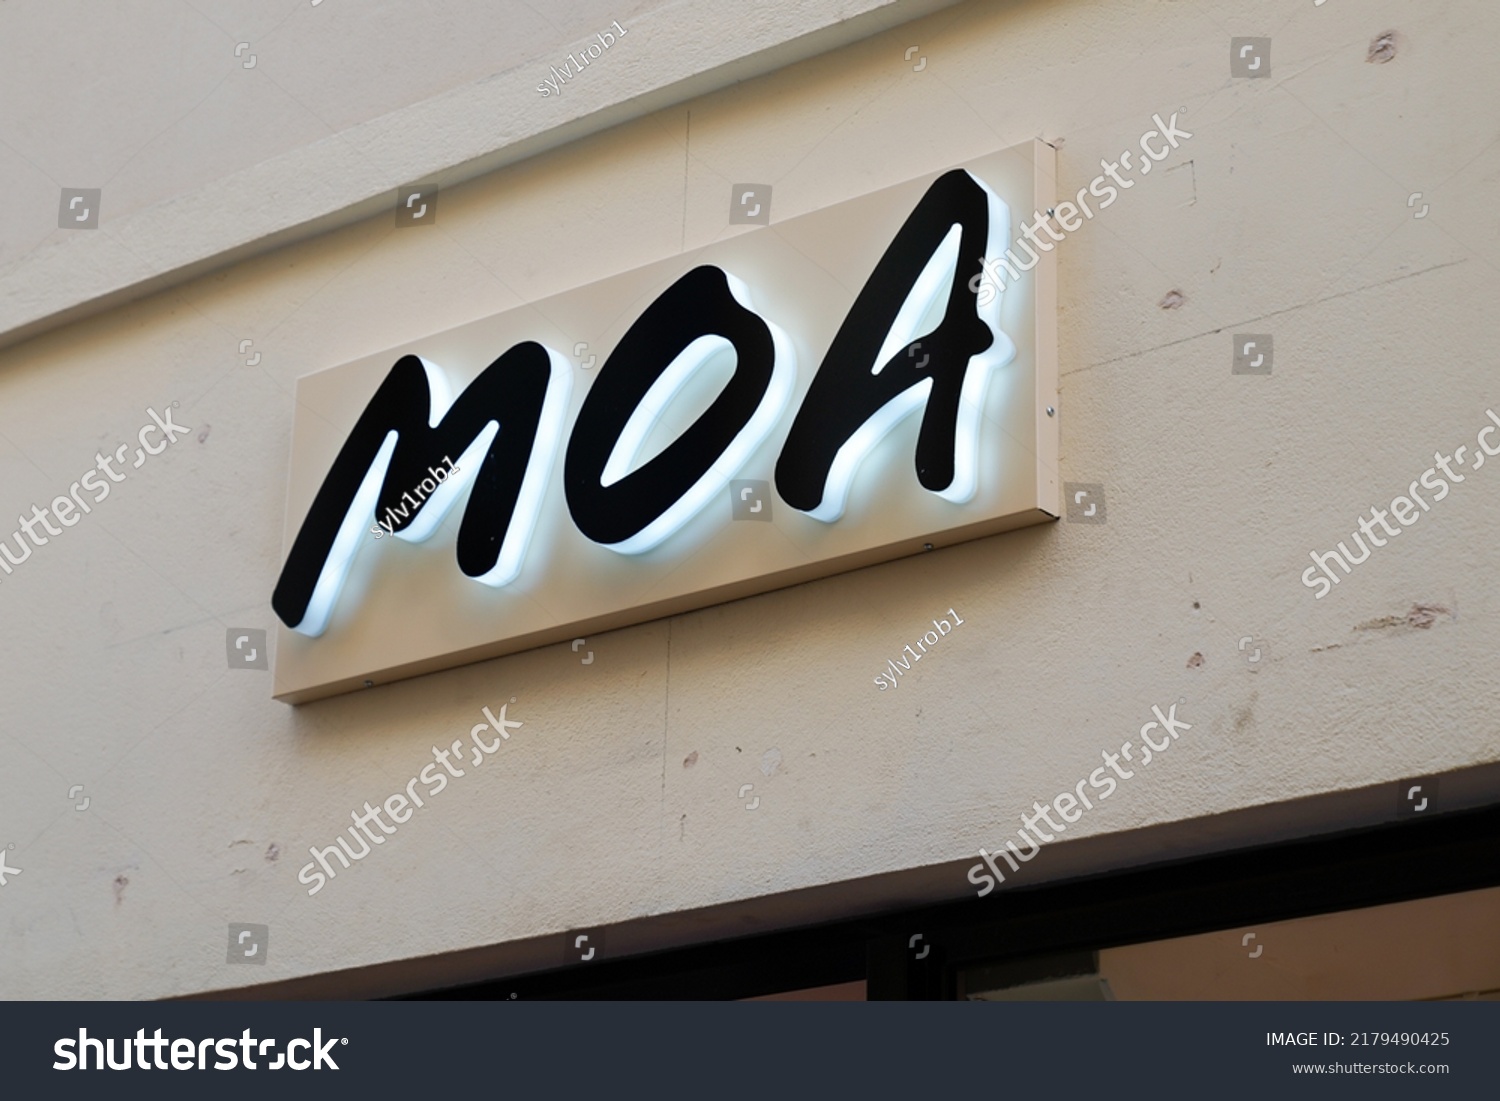 34 Moa logo Images, Stock Photos & Vectors | Shutterstock